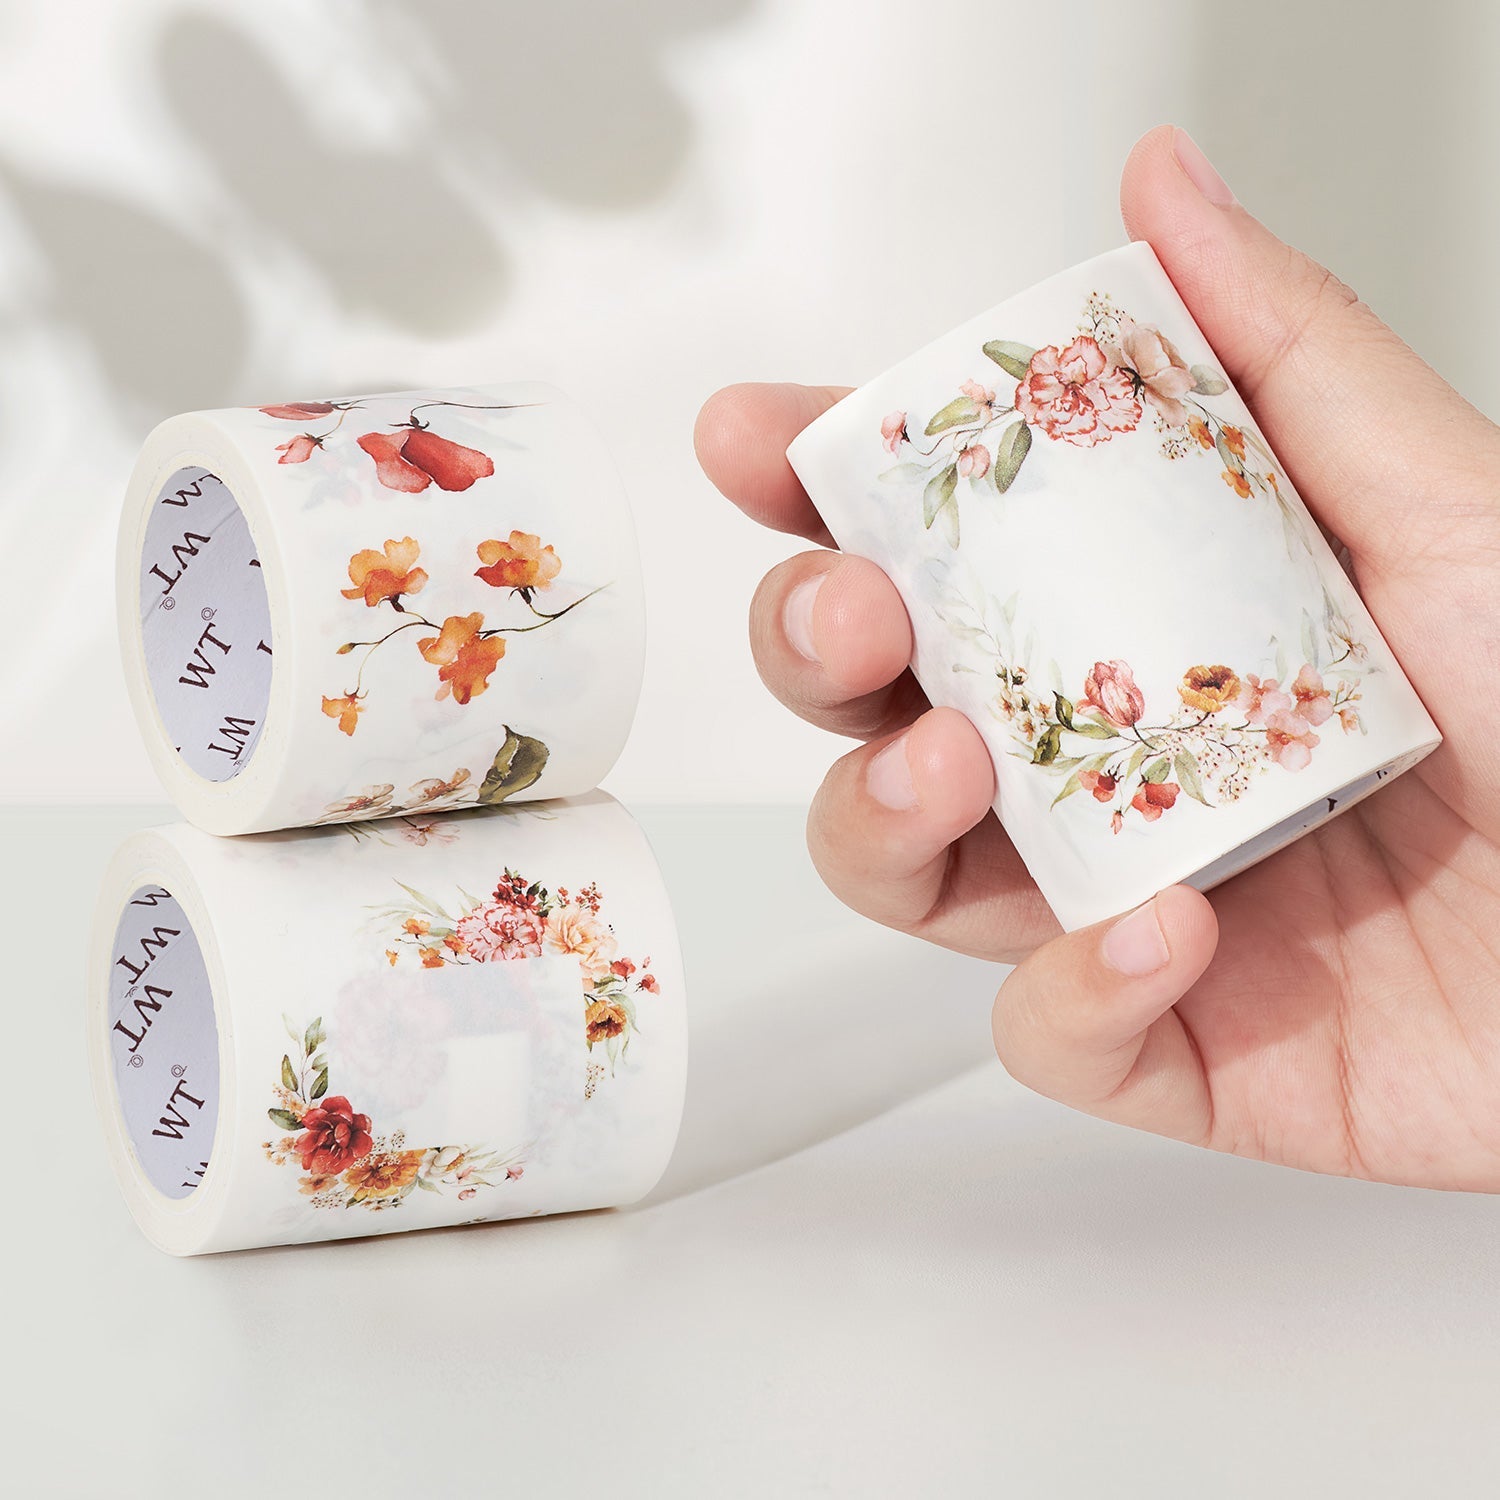  Autumn Bouquet Washi Tape Sticker Set by The Washi Tape Shop The Washi Tape Shop Perfumarie